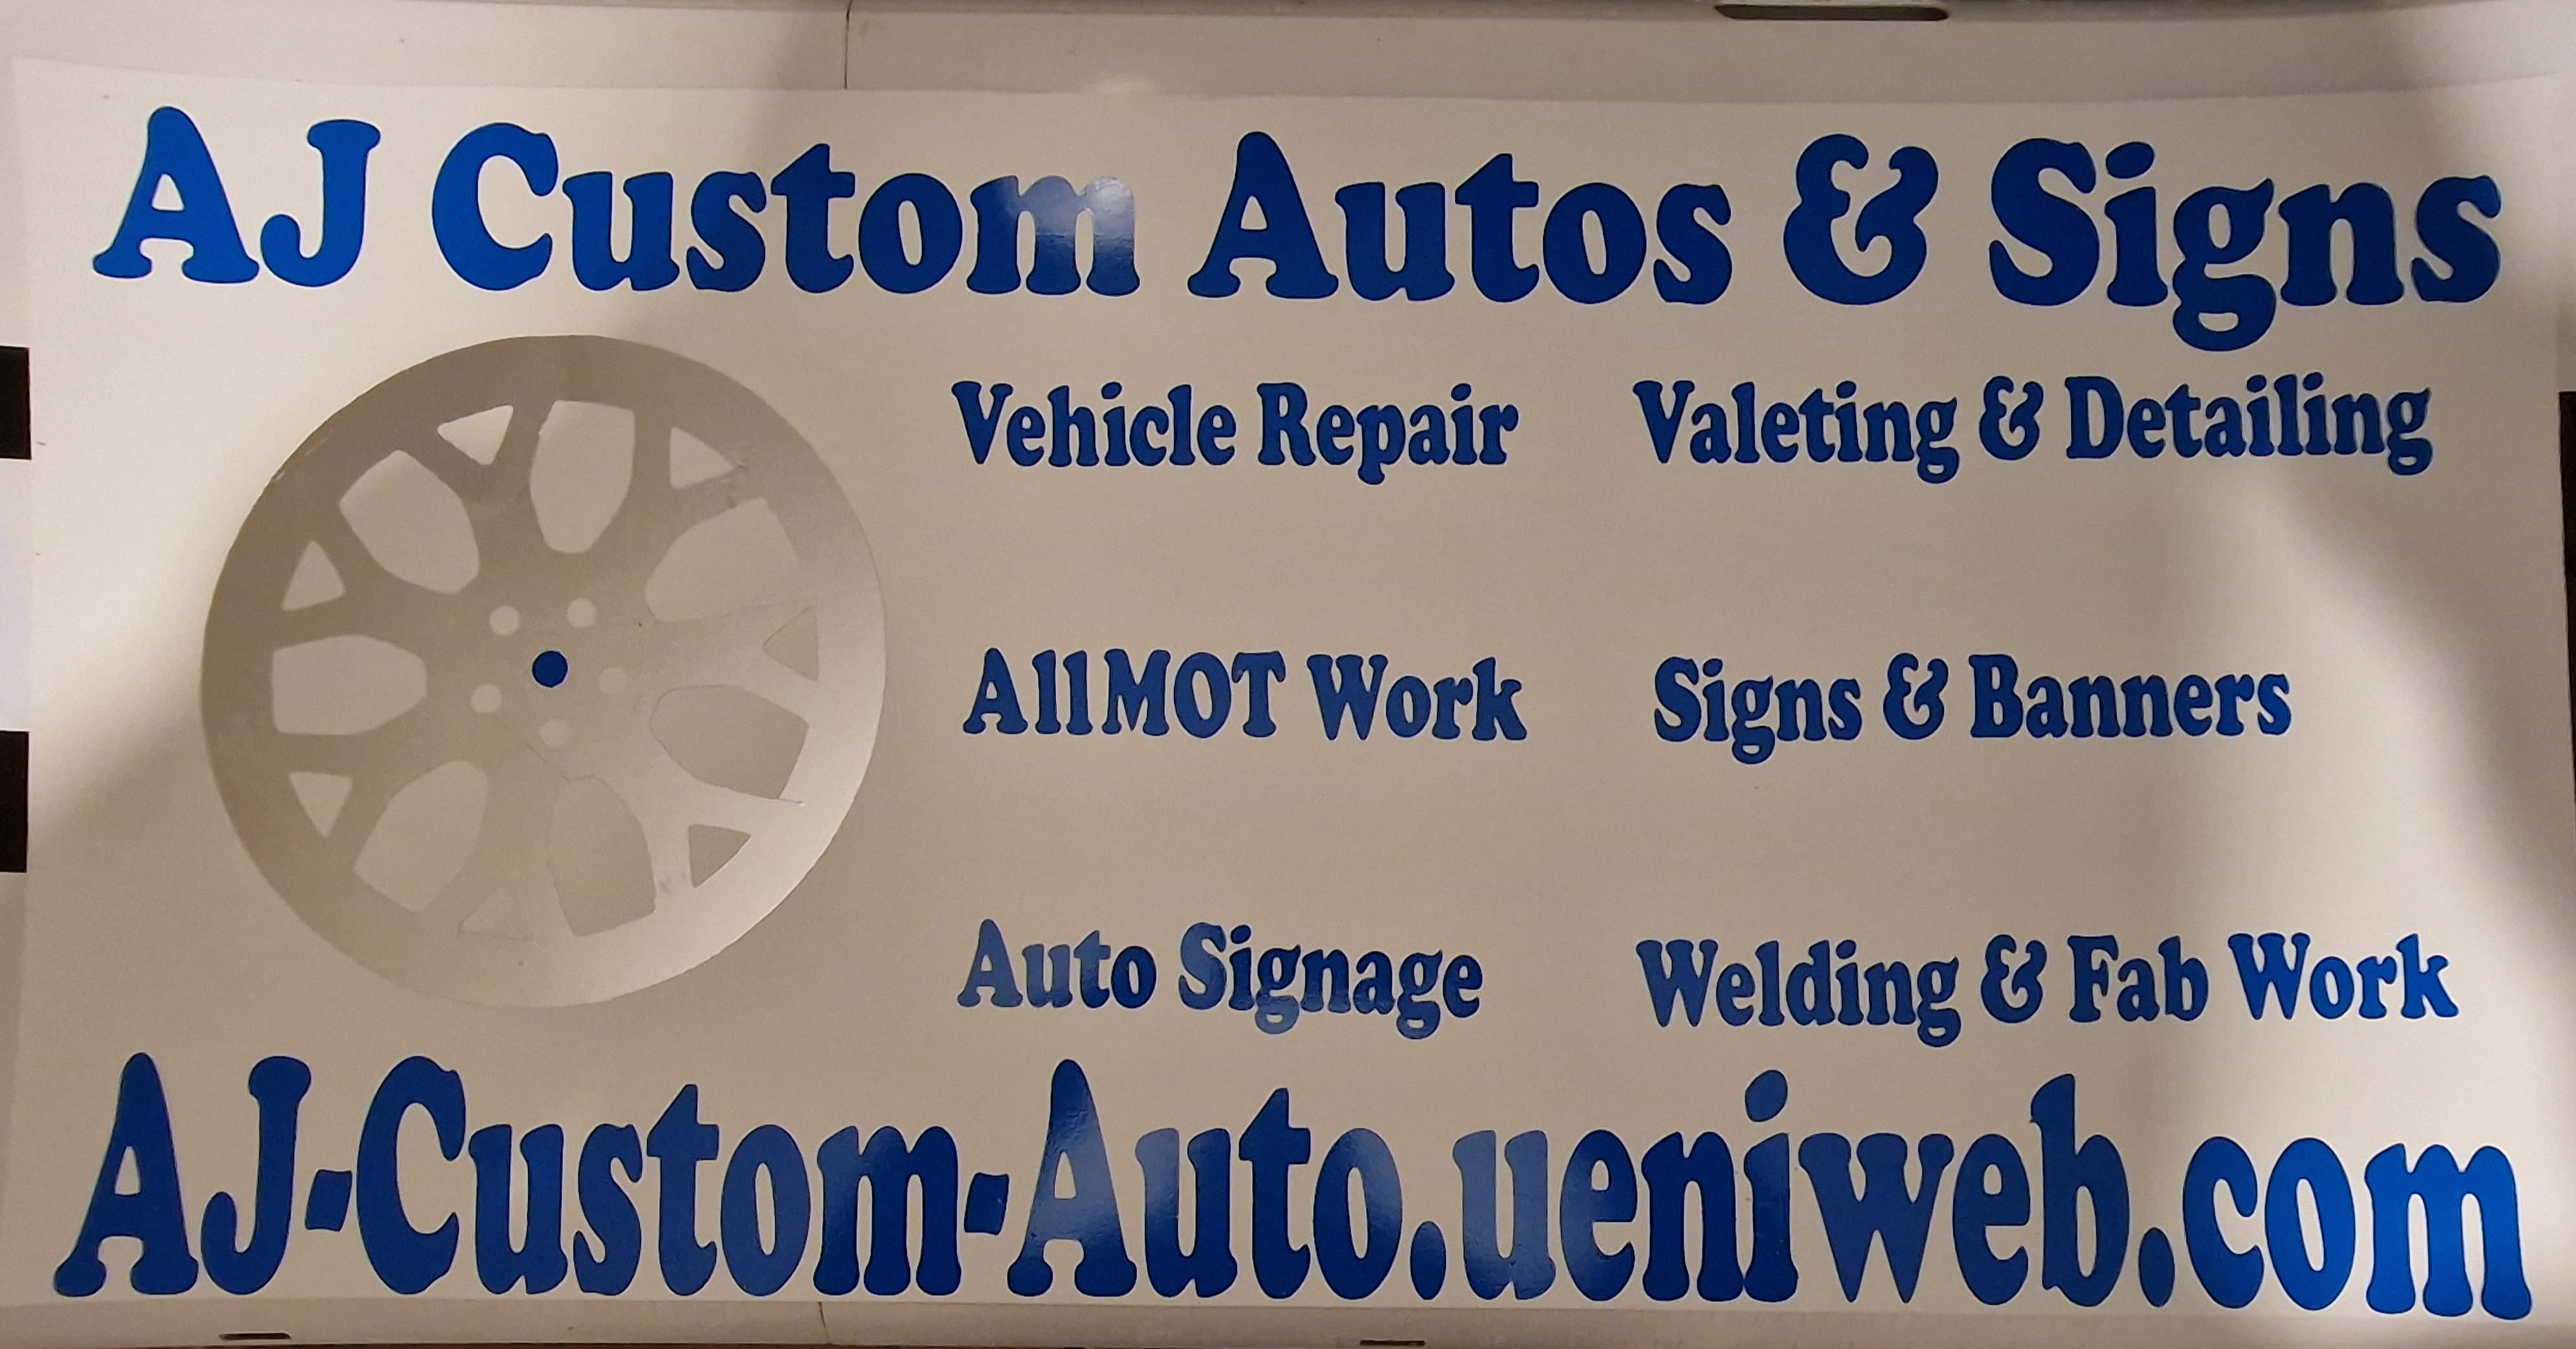 AJ Custom Autos & Signs